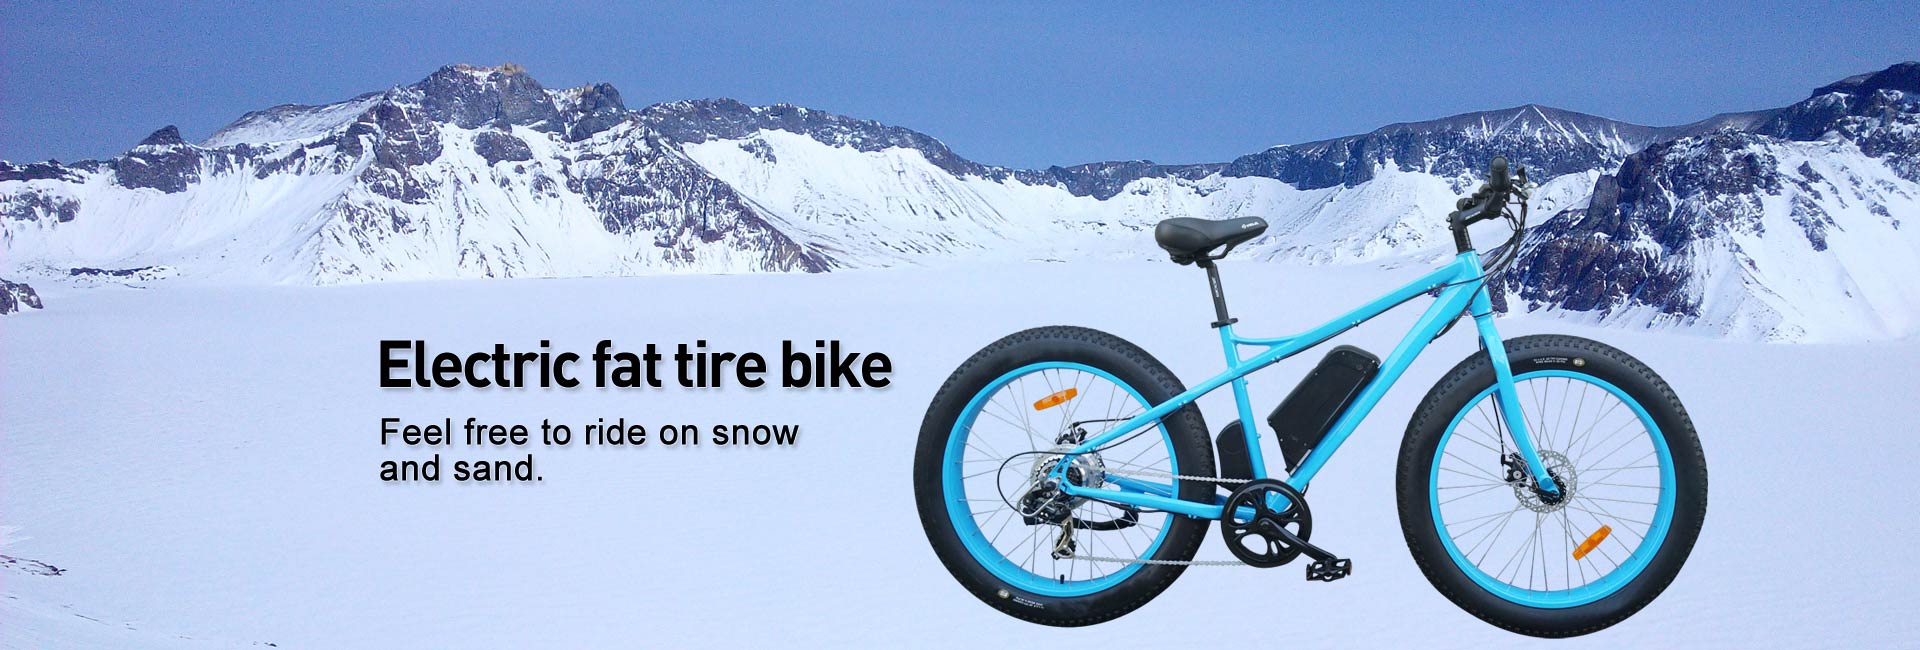 electric flat tire bike